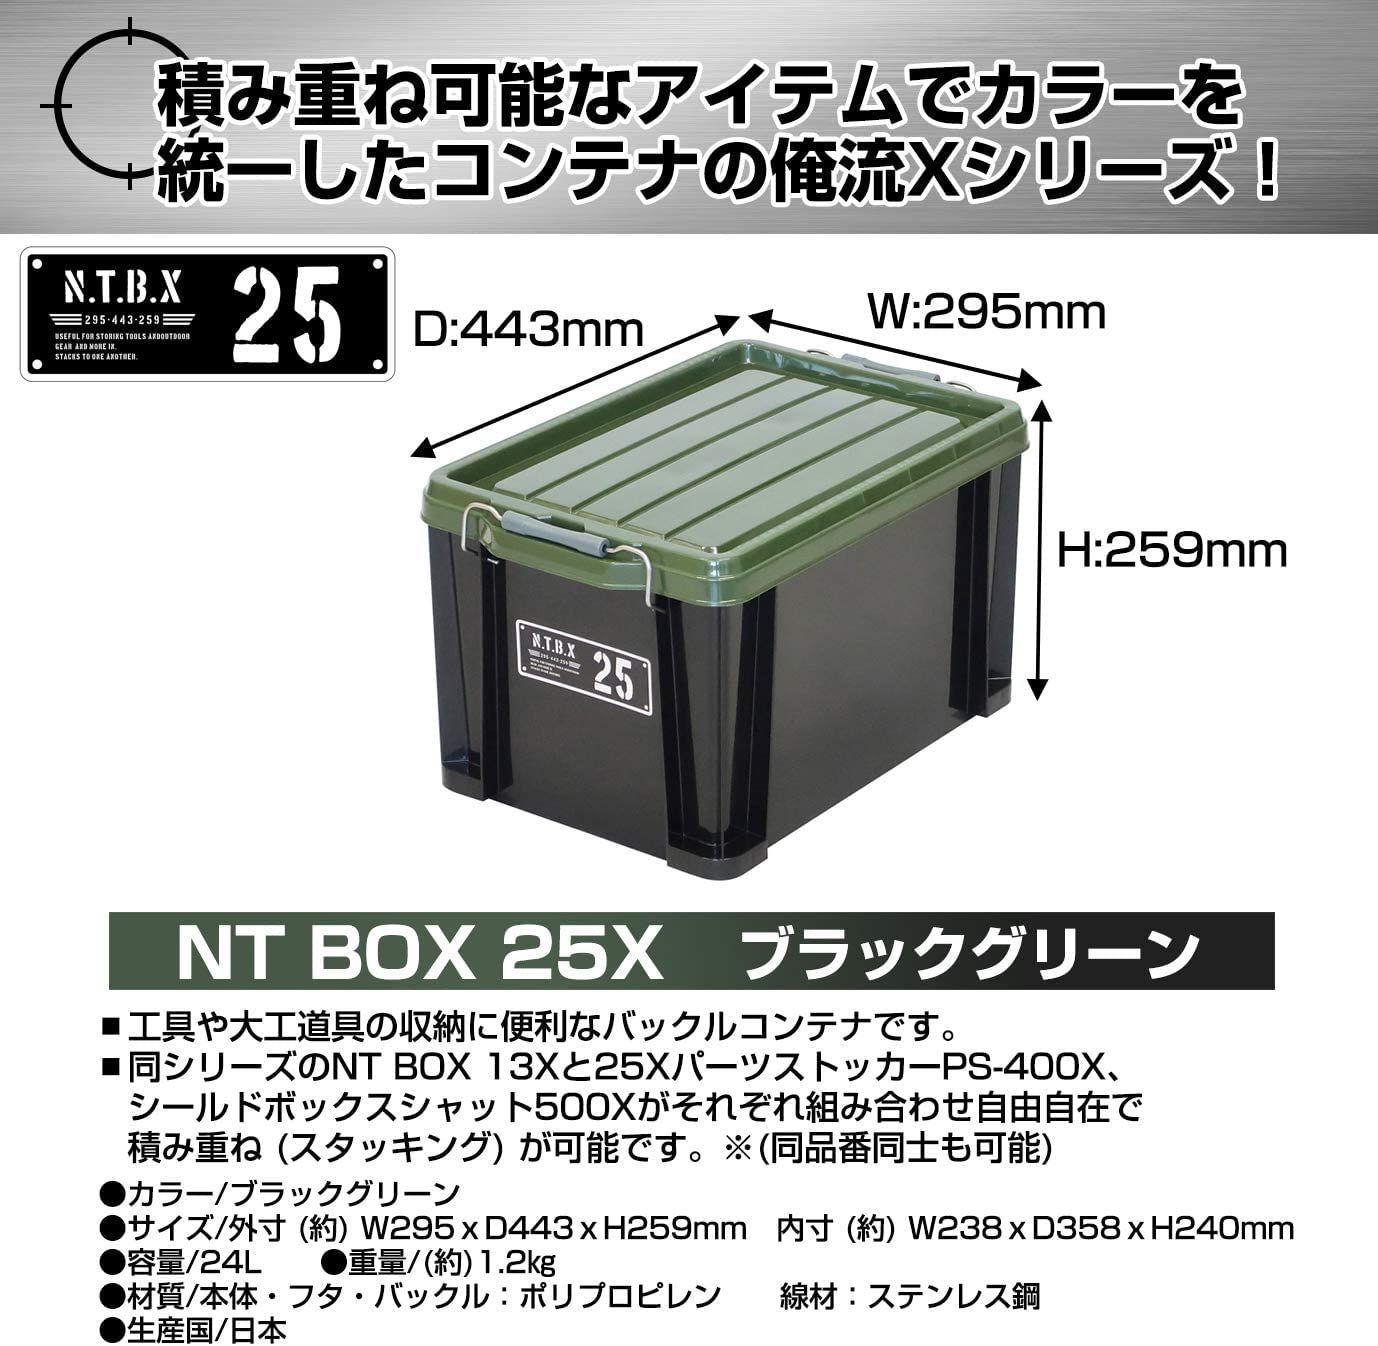 JEJアステージ 収納ボックス 日本製 バックルコンテナ 積み重ね NTボックス